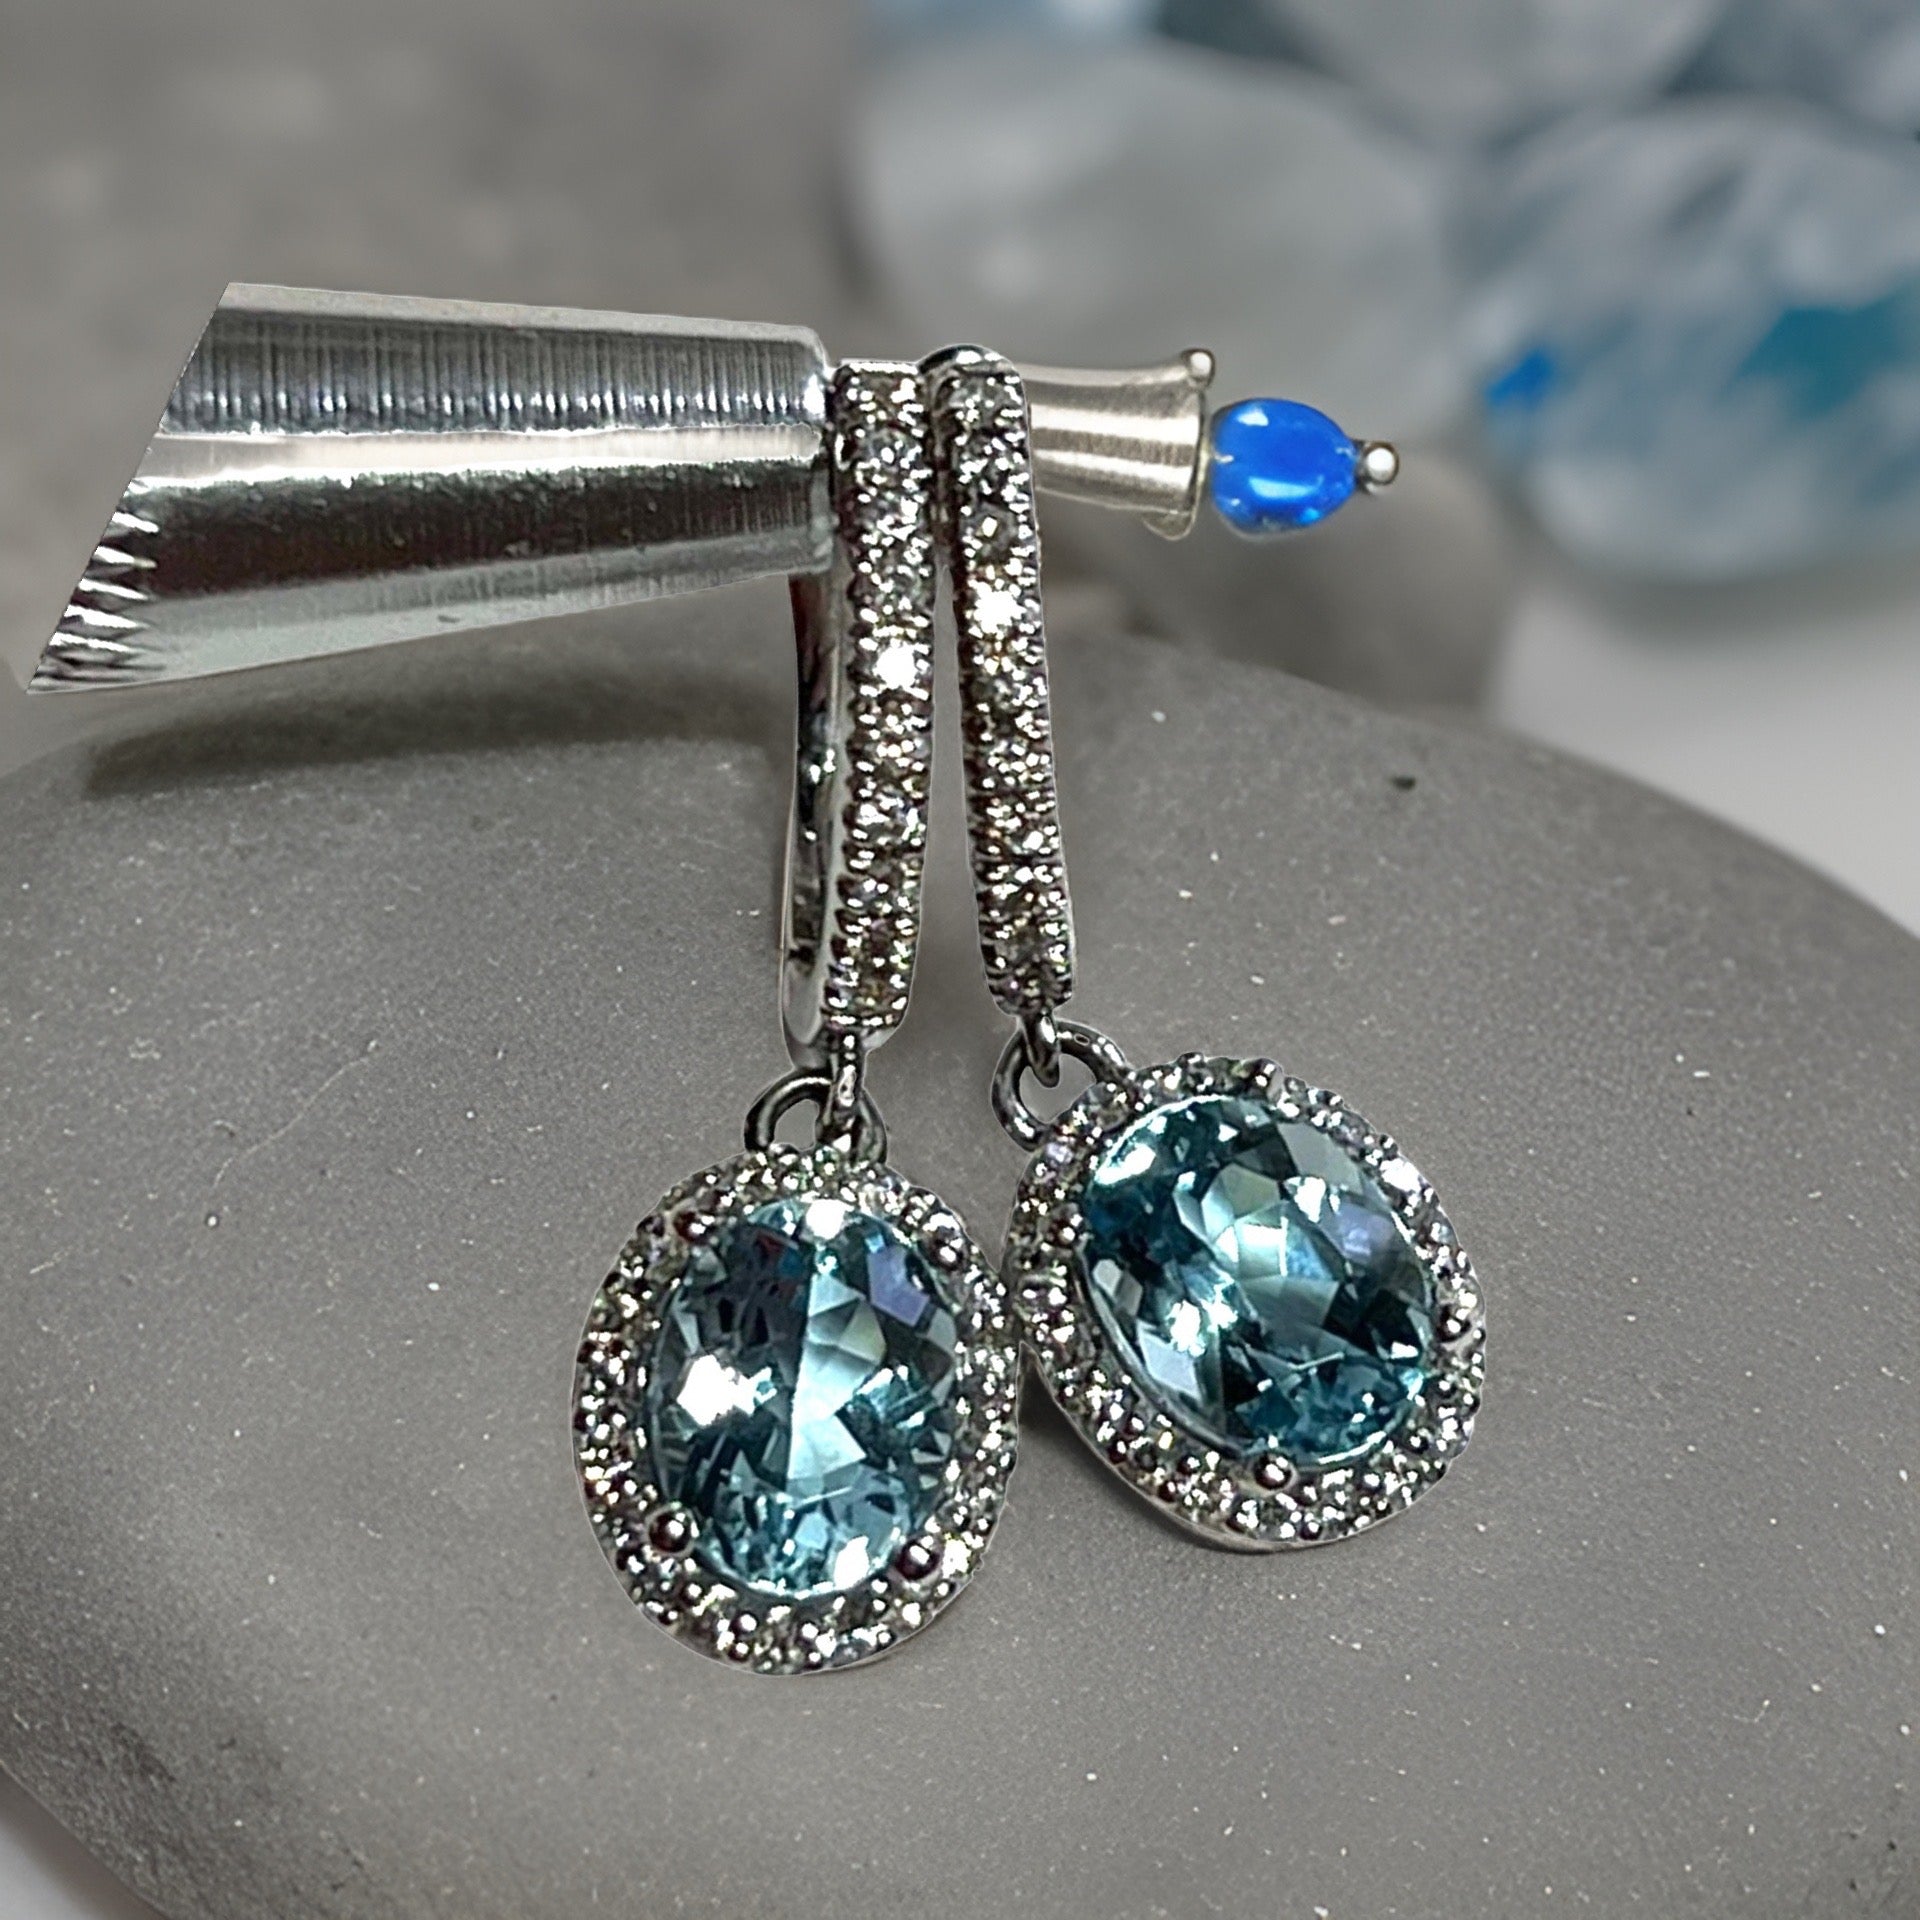 Natural Aquamarine Diamond Dangle Earrings 14k W Gold 2.55 TCW Certified $4,950 211358 - Certified Fine Jewelry